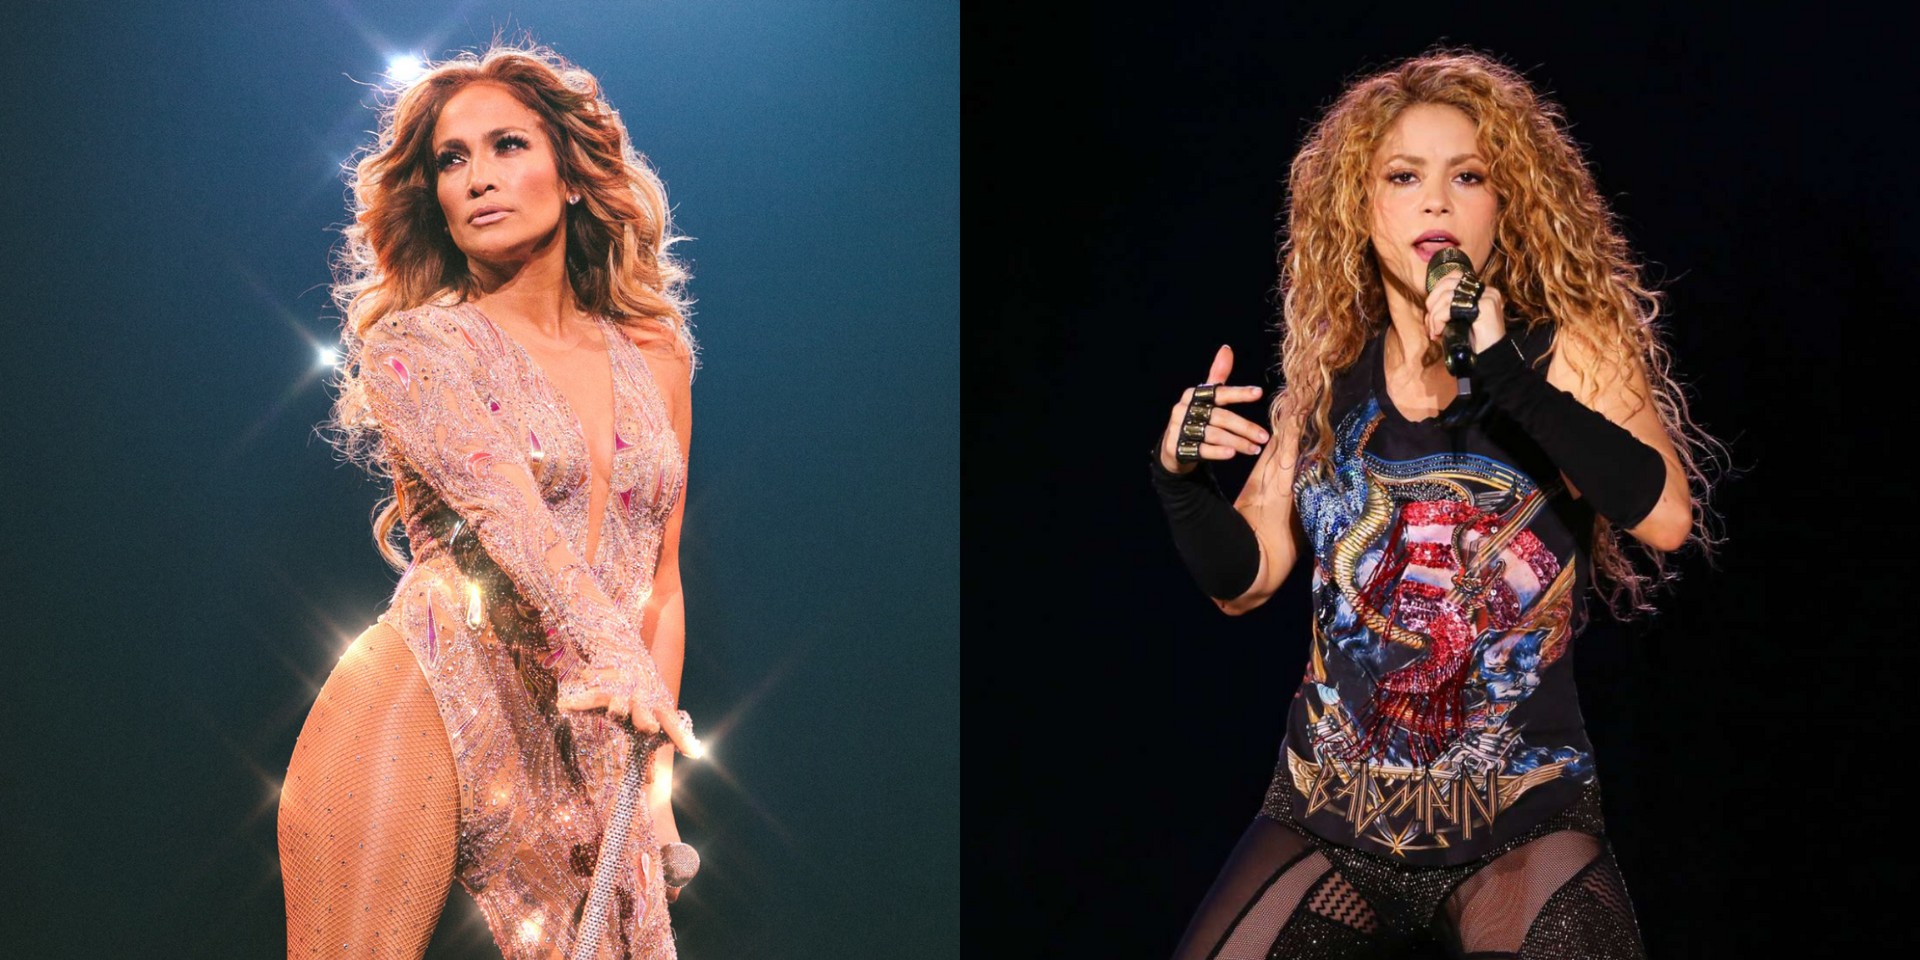 Jennifer Lopez and Shakira to co-headline the 2020 Super Bowl Halftime show